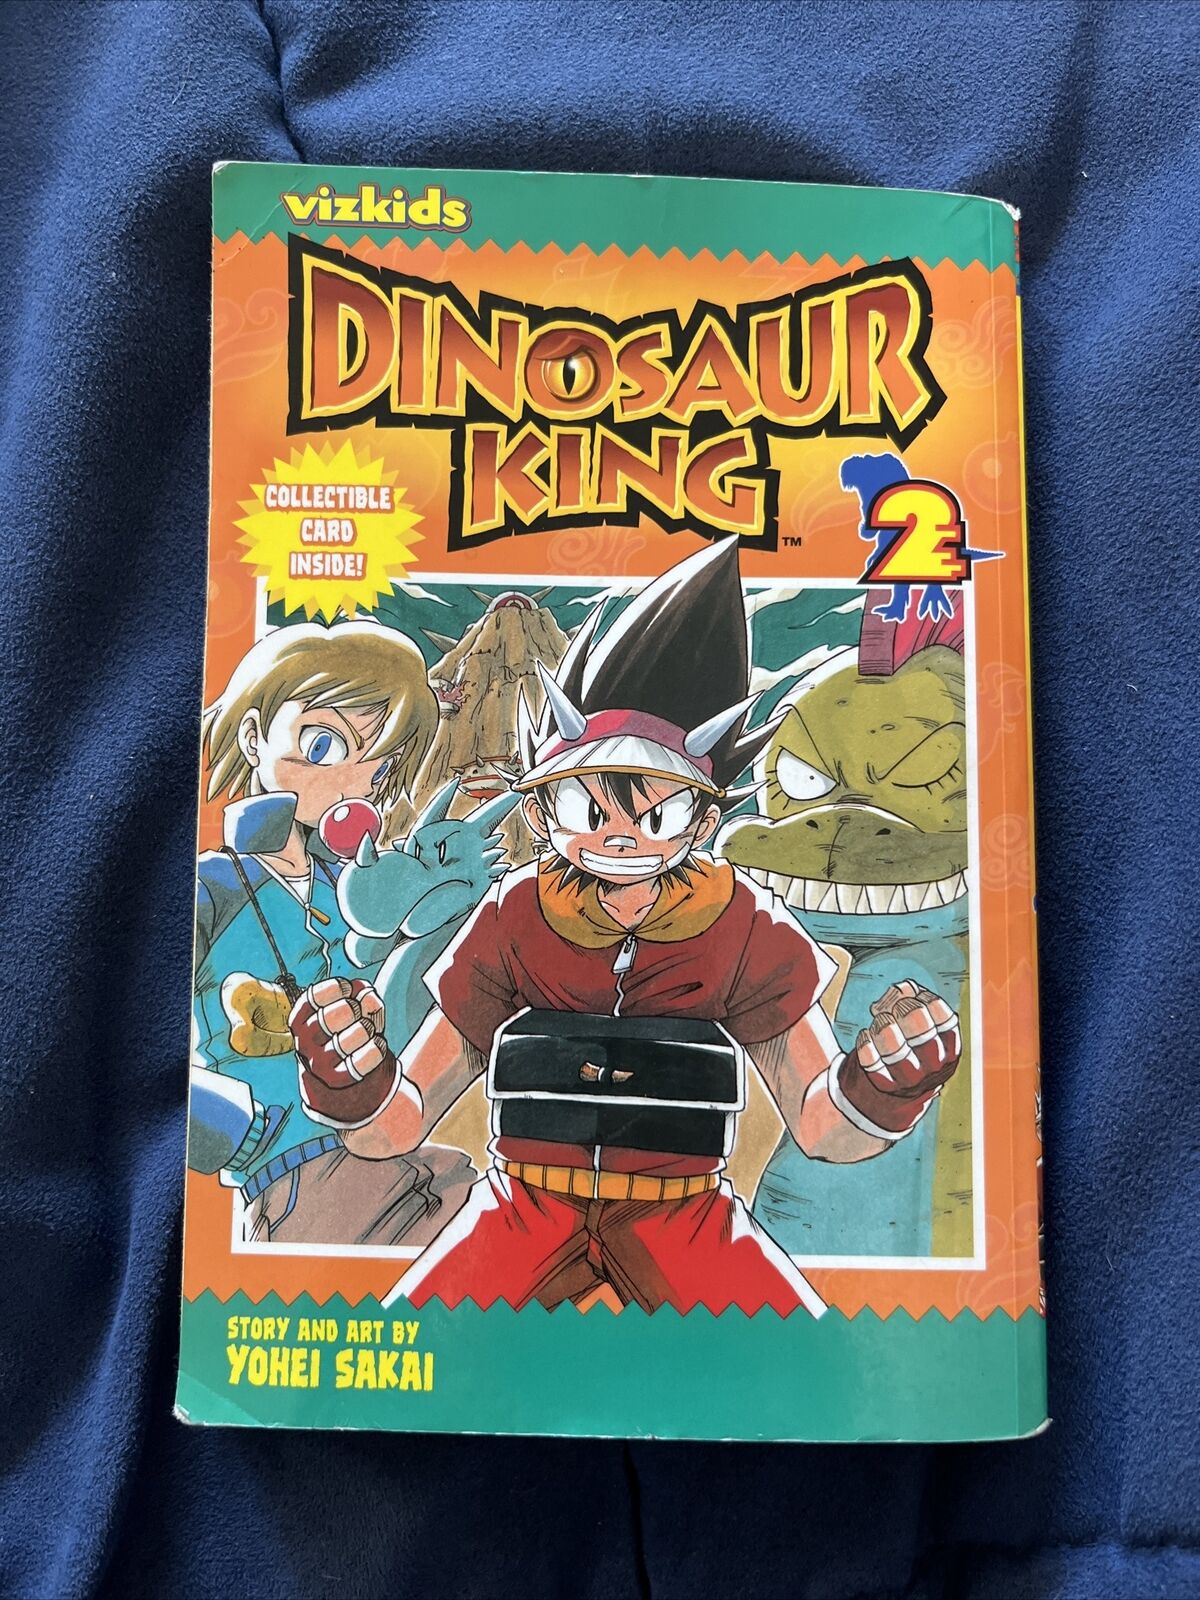 Dinosaur King Vol. 2 2010 Manga Book Yohei Sakai Card VizKids Viz Media FOXING